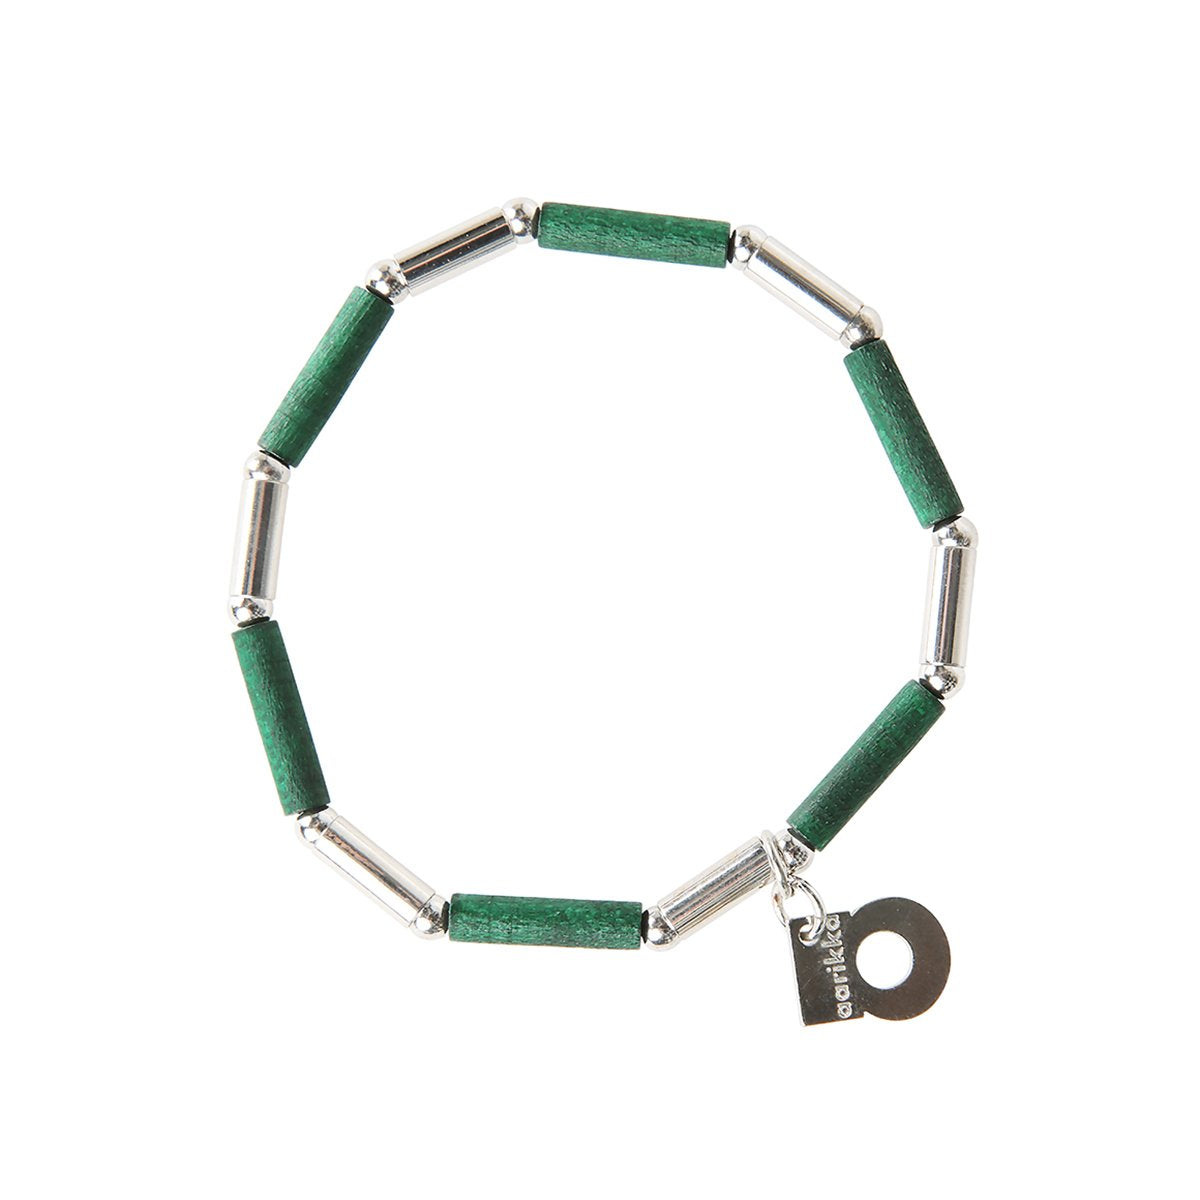 Vieno bracelet, green